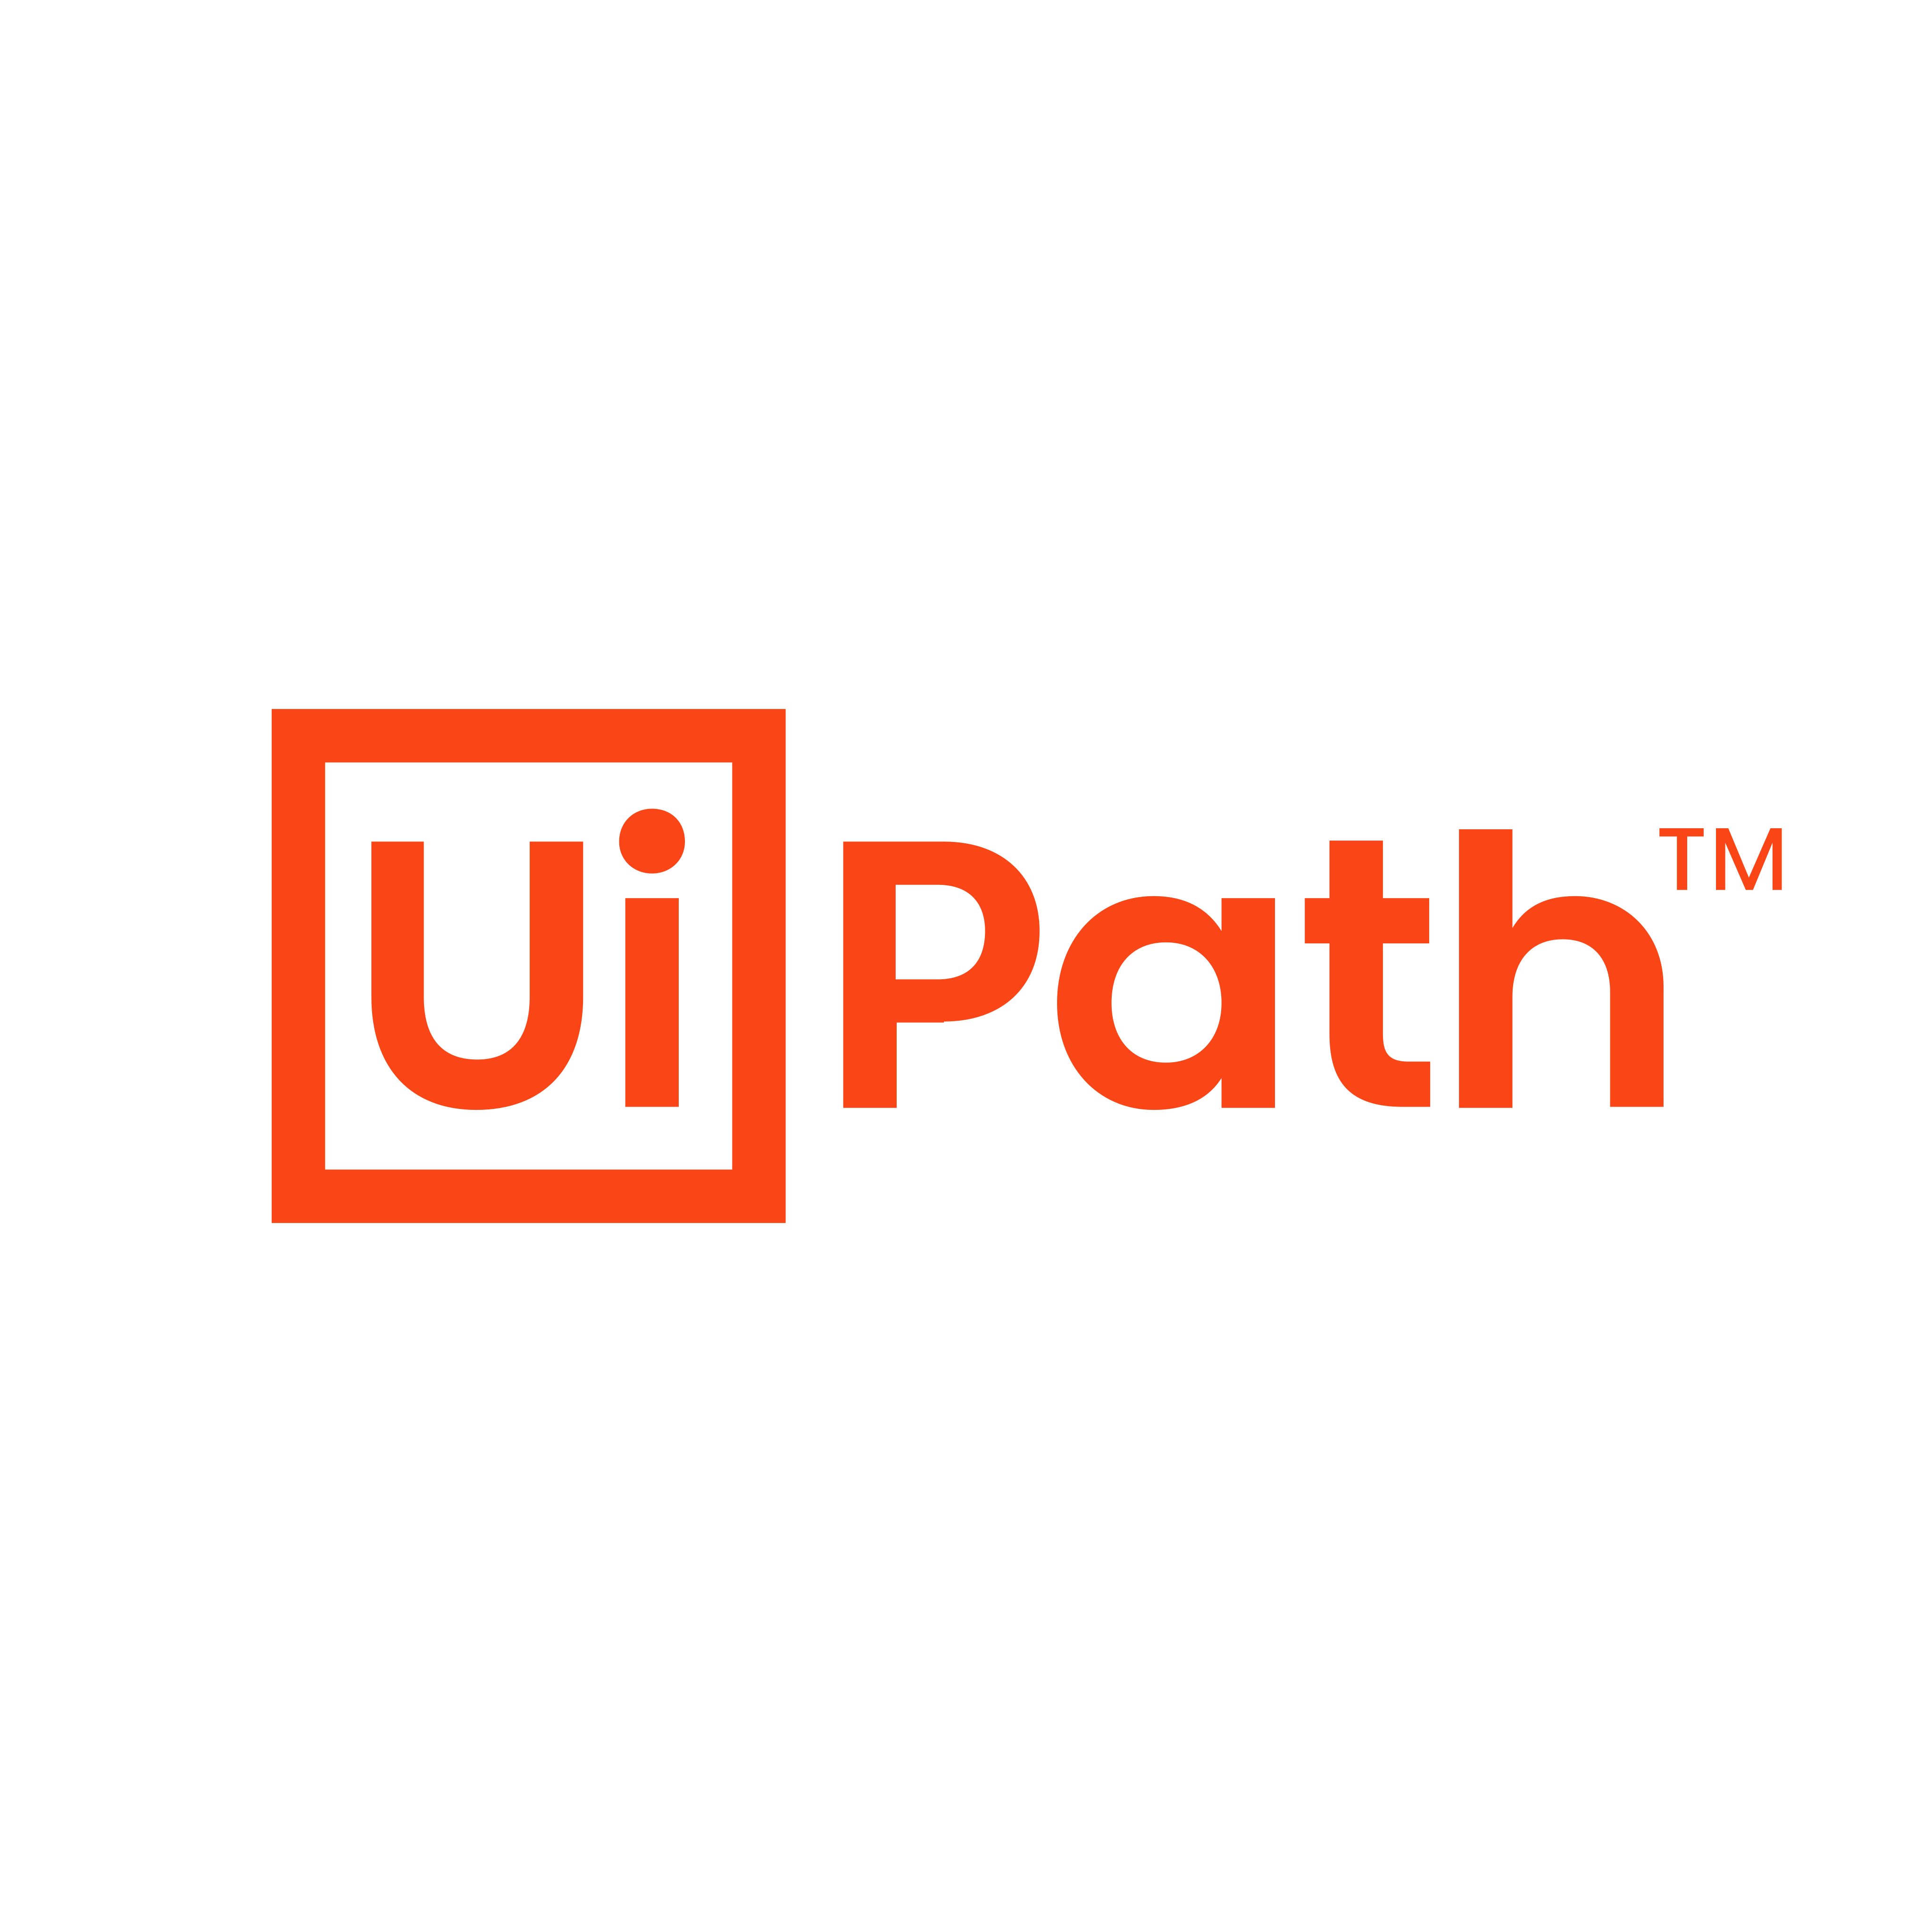 UiPath Logo PNG.